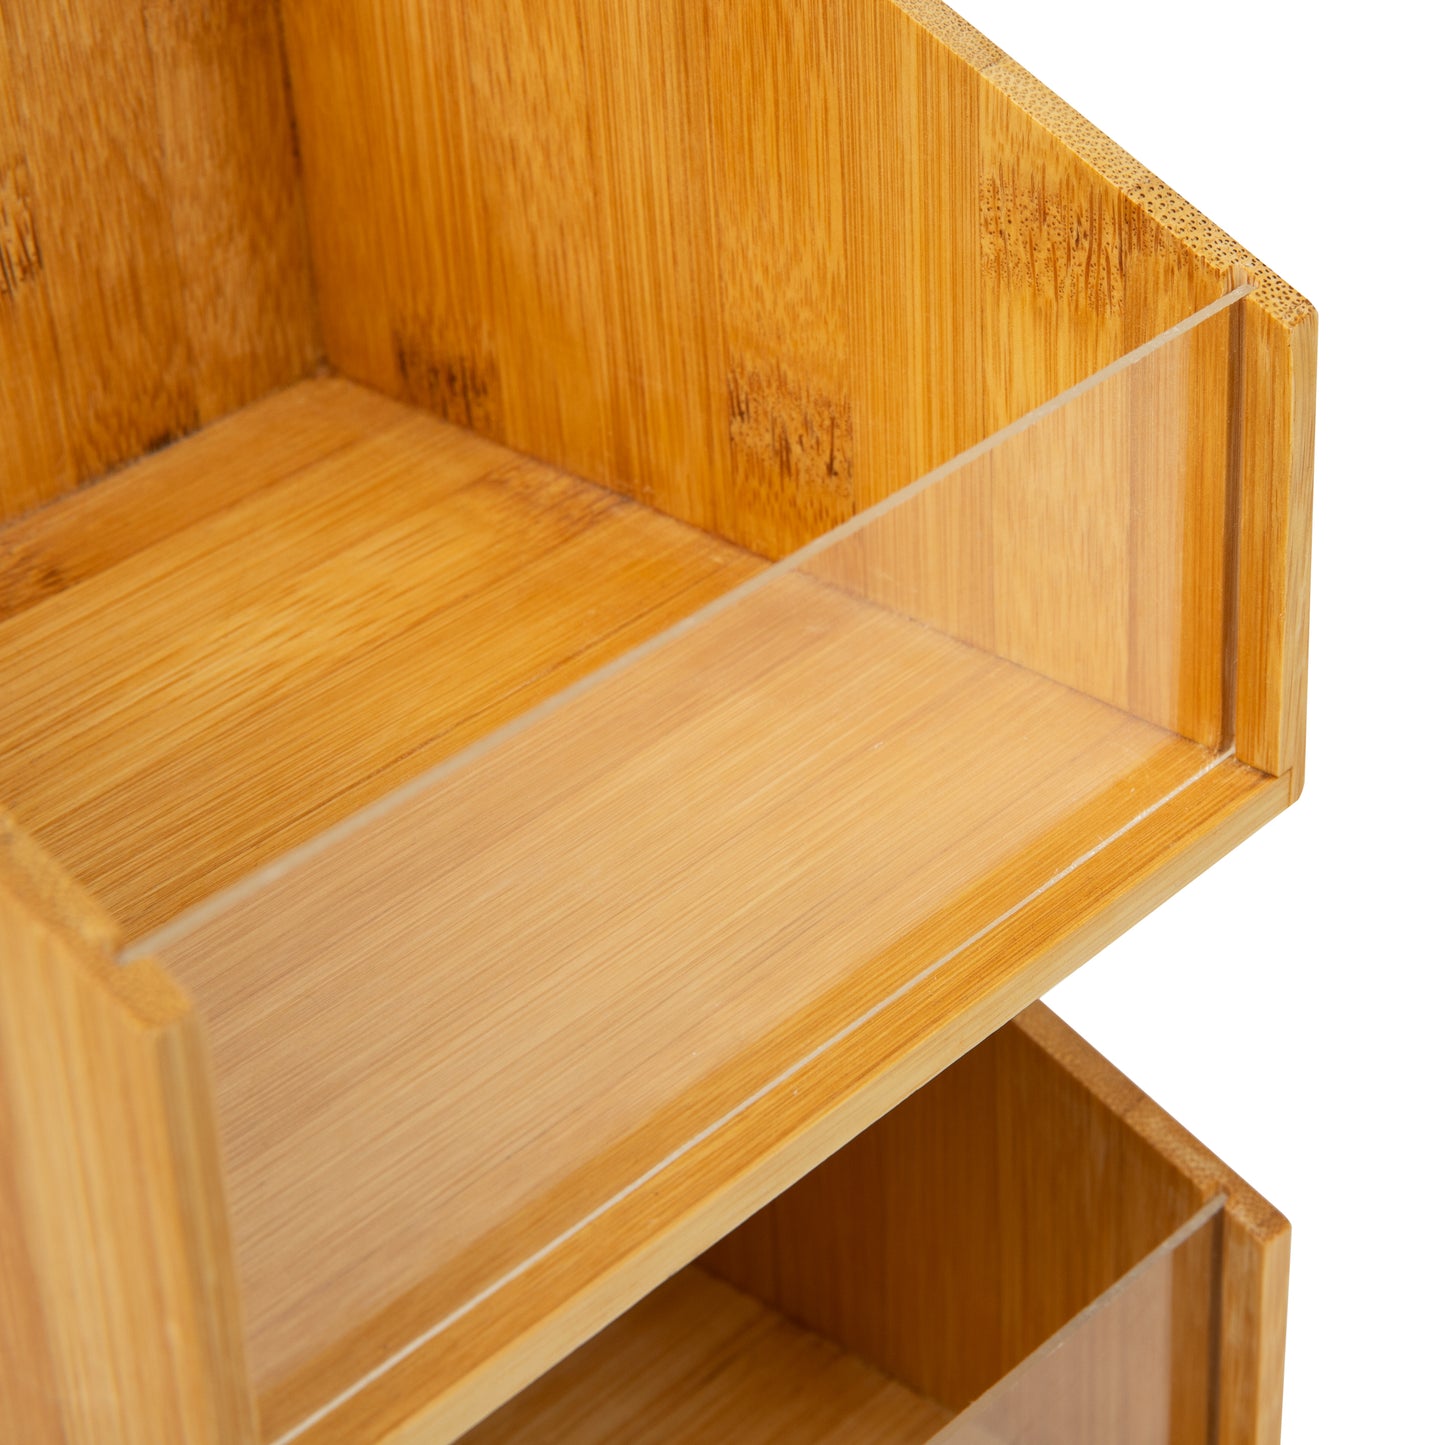 Mind Reader Bali Collection, 3-Compartment, 3-Tier Bamboo Condiment Storage, Countertop Organizer, 6.5"L x 6.5"W x 15"H, Brown